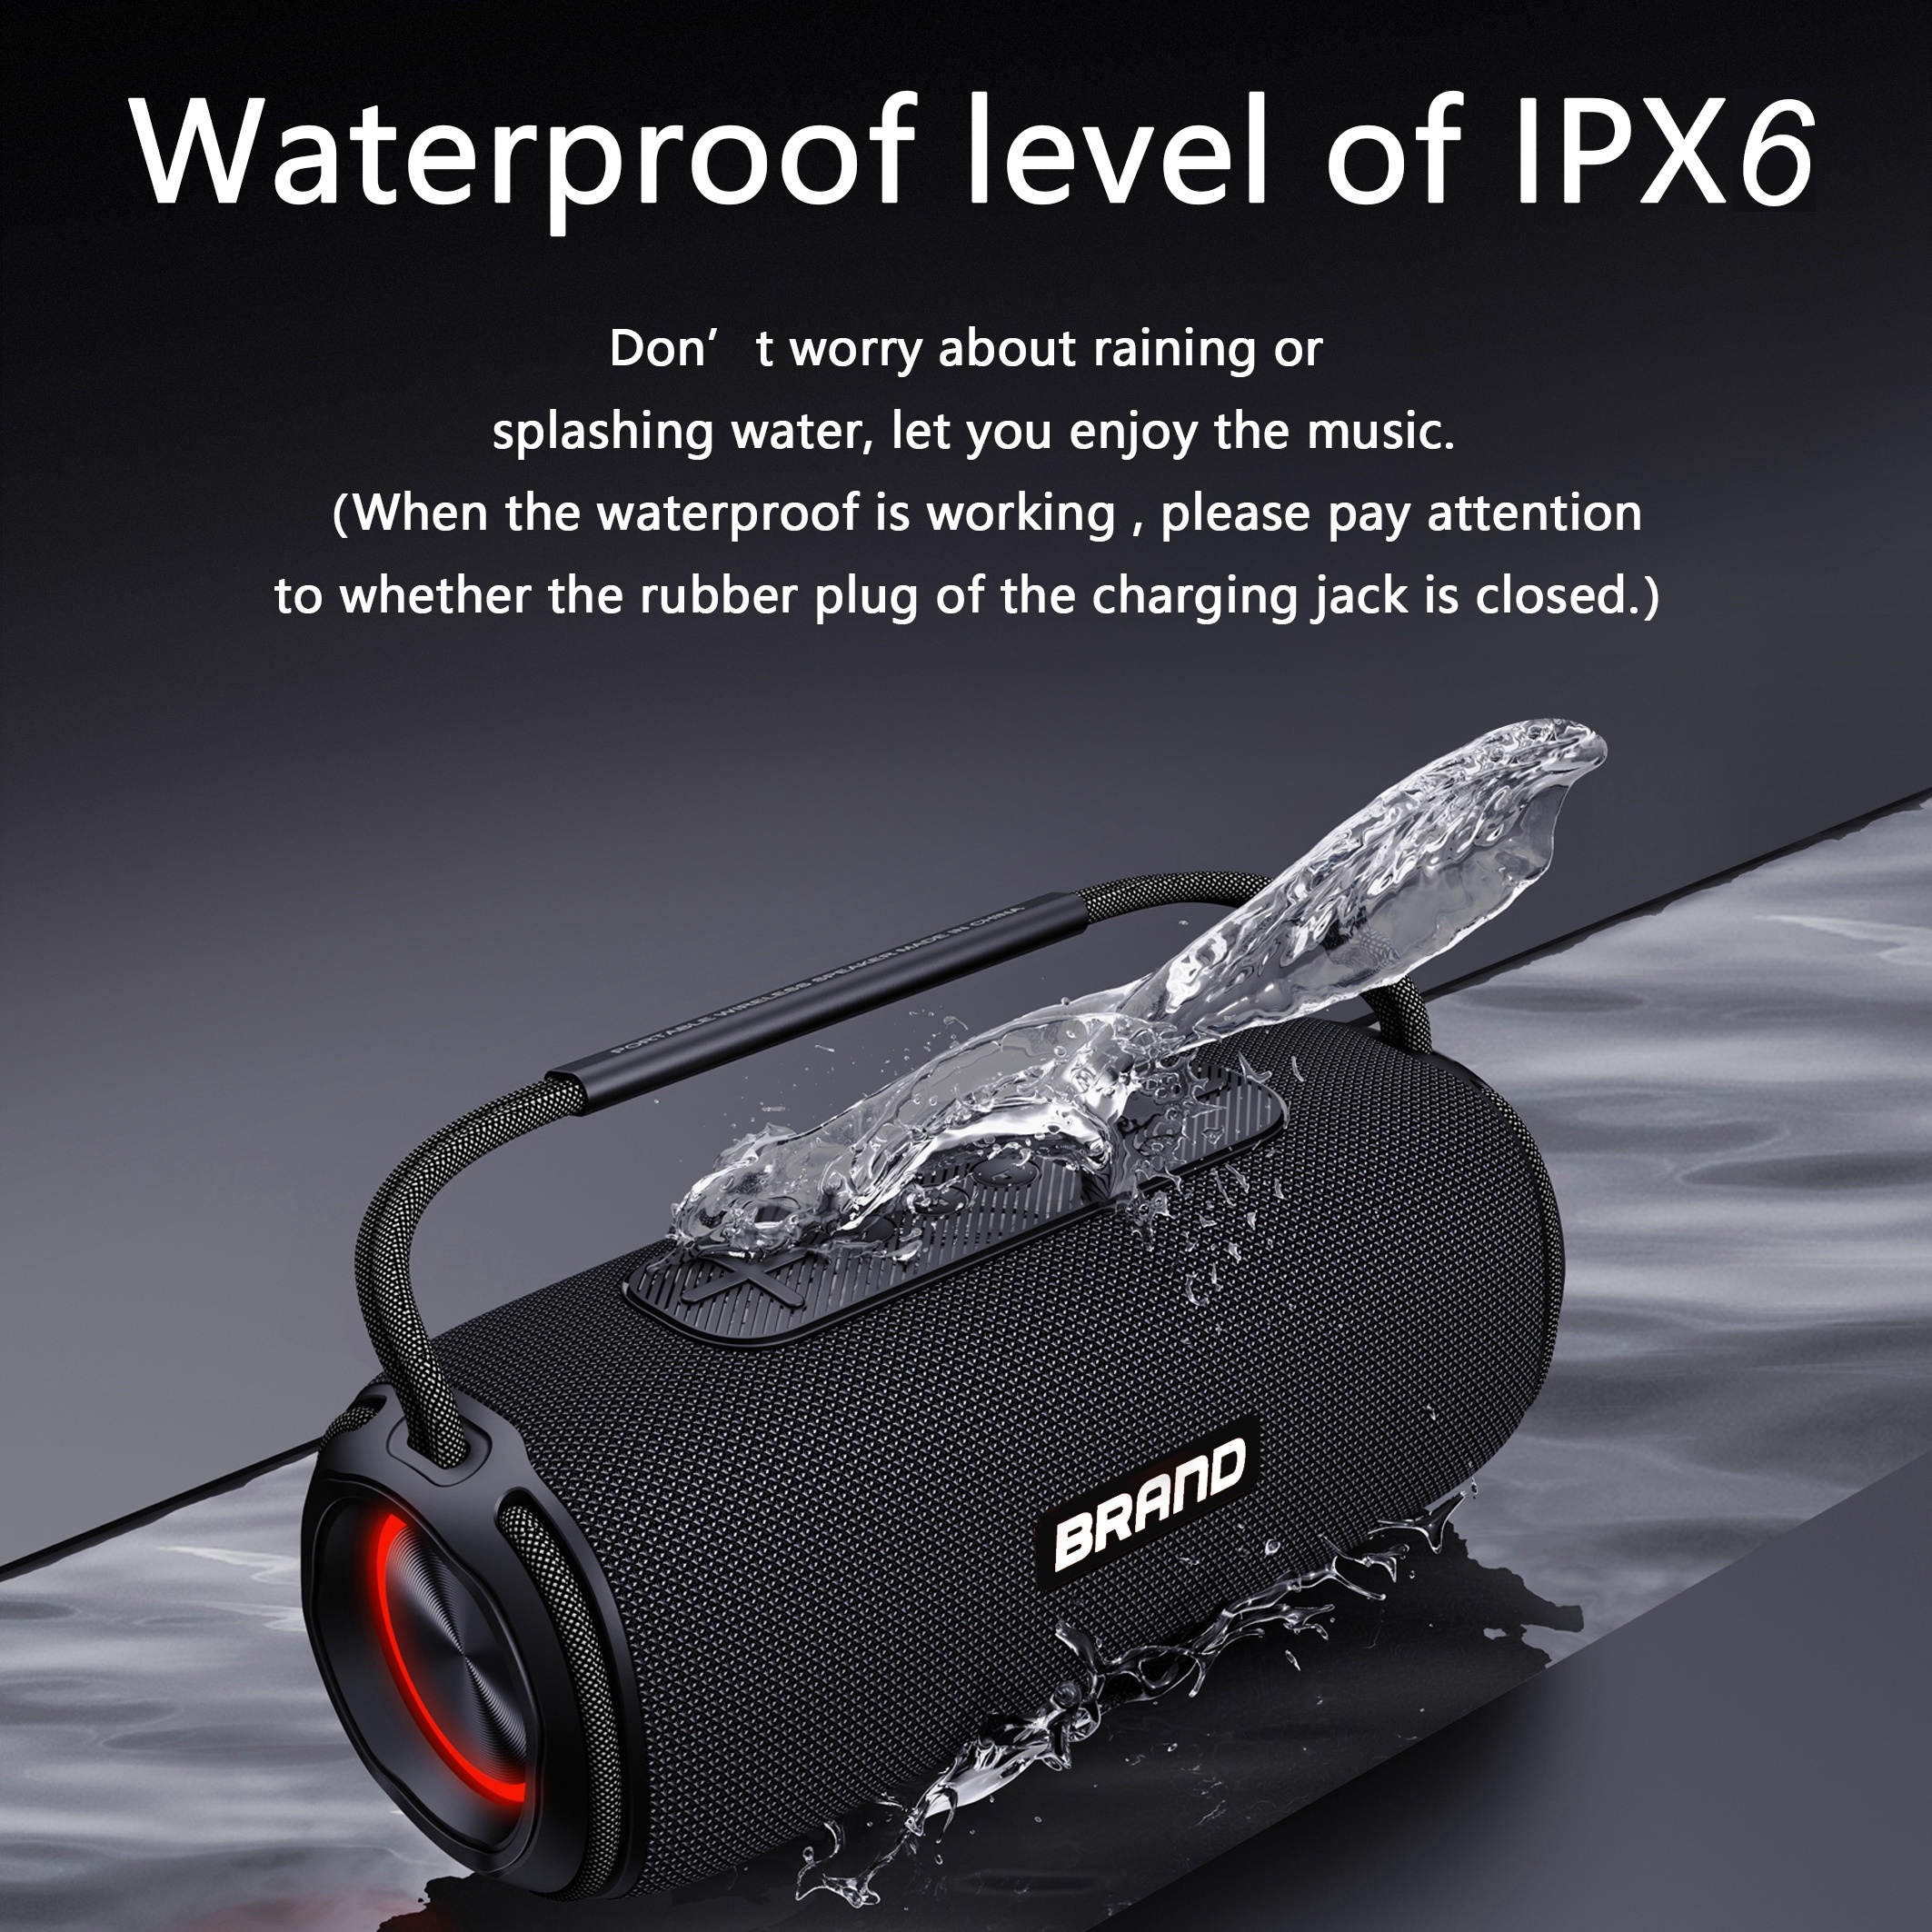 Booms Box 3 High Power 40W Bluetooth Speaker Portable Waterproof